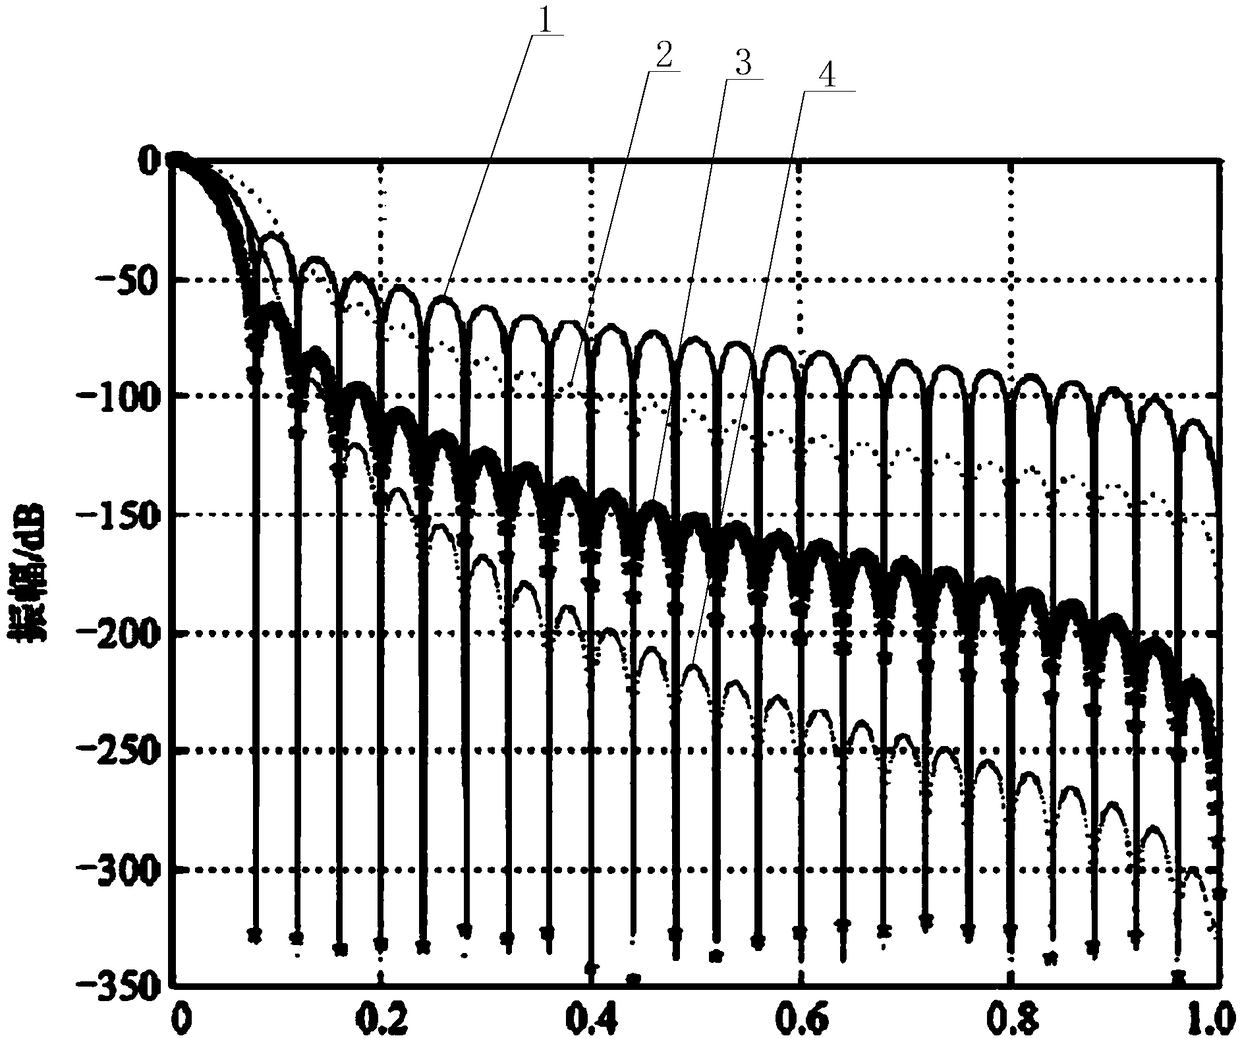 Hanning self-multiplying convolution window FFT tri-spectrum line interpolation harmonic analysis method